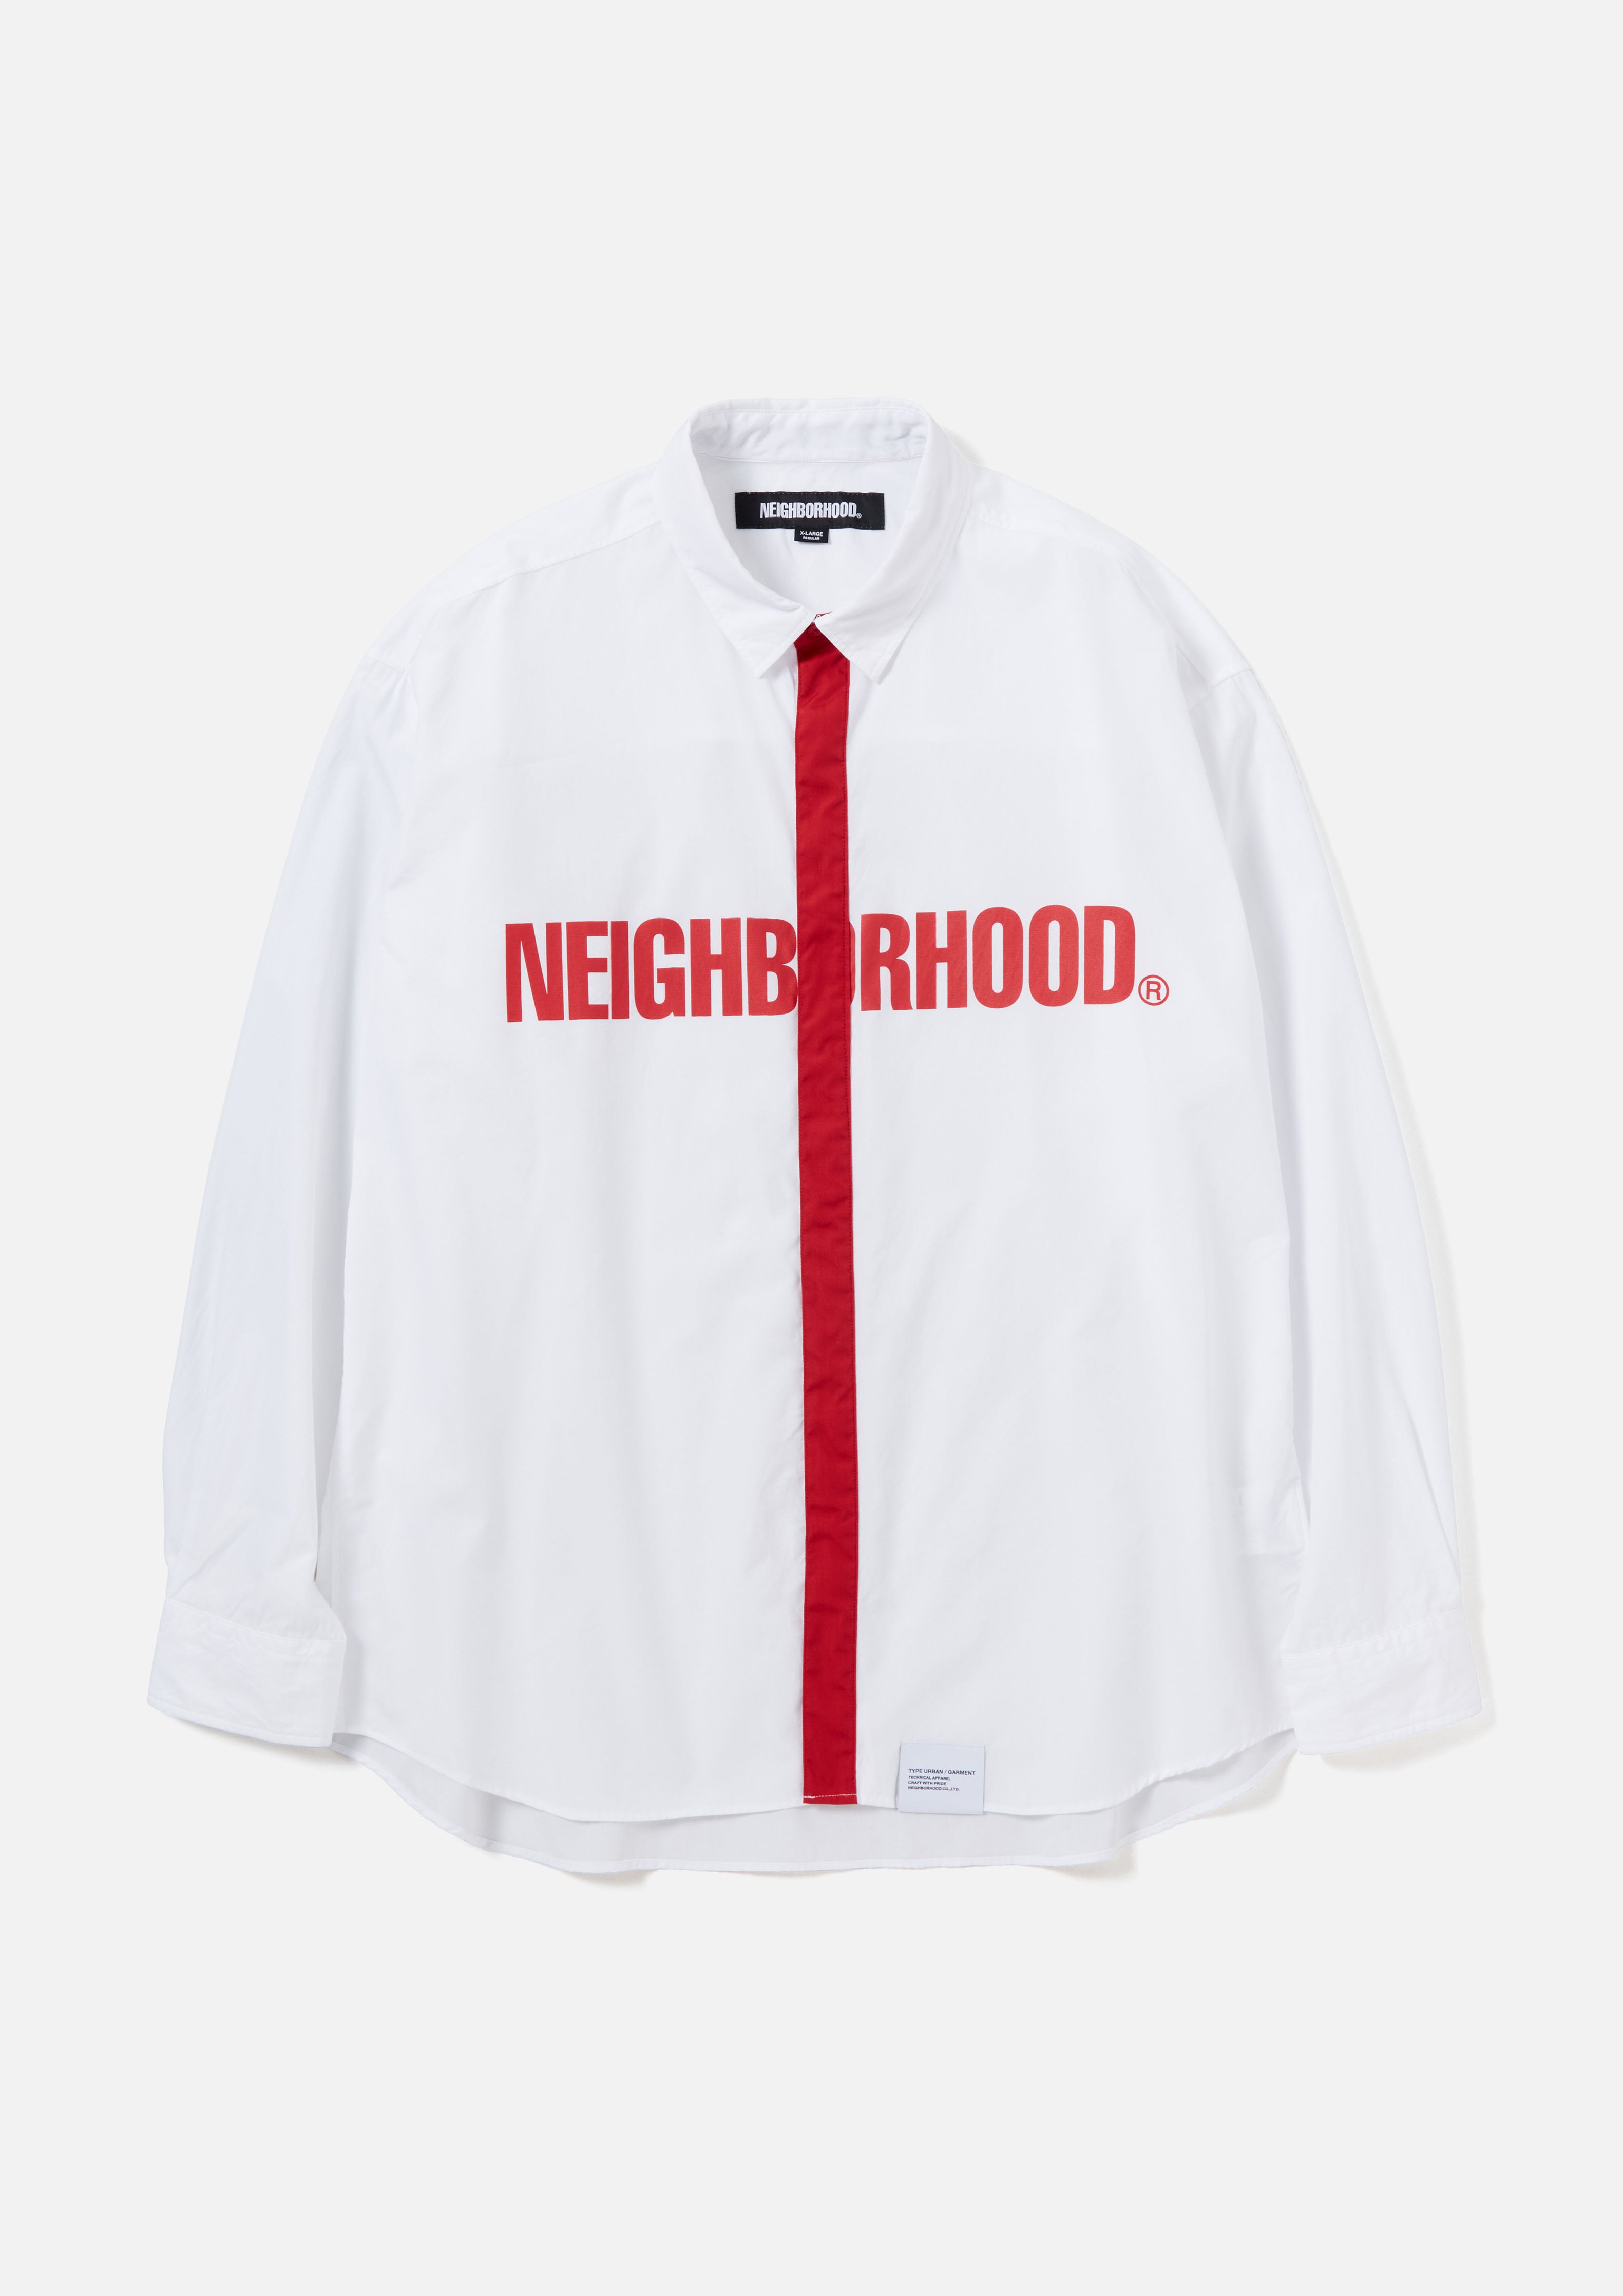 NEIGHBORHOOD TIE SHIRT LS シャツ L | kensysgas.com